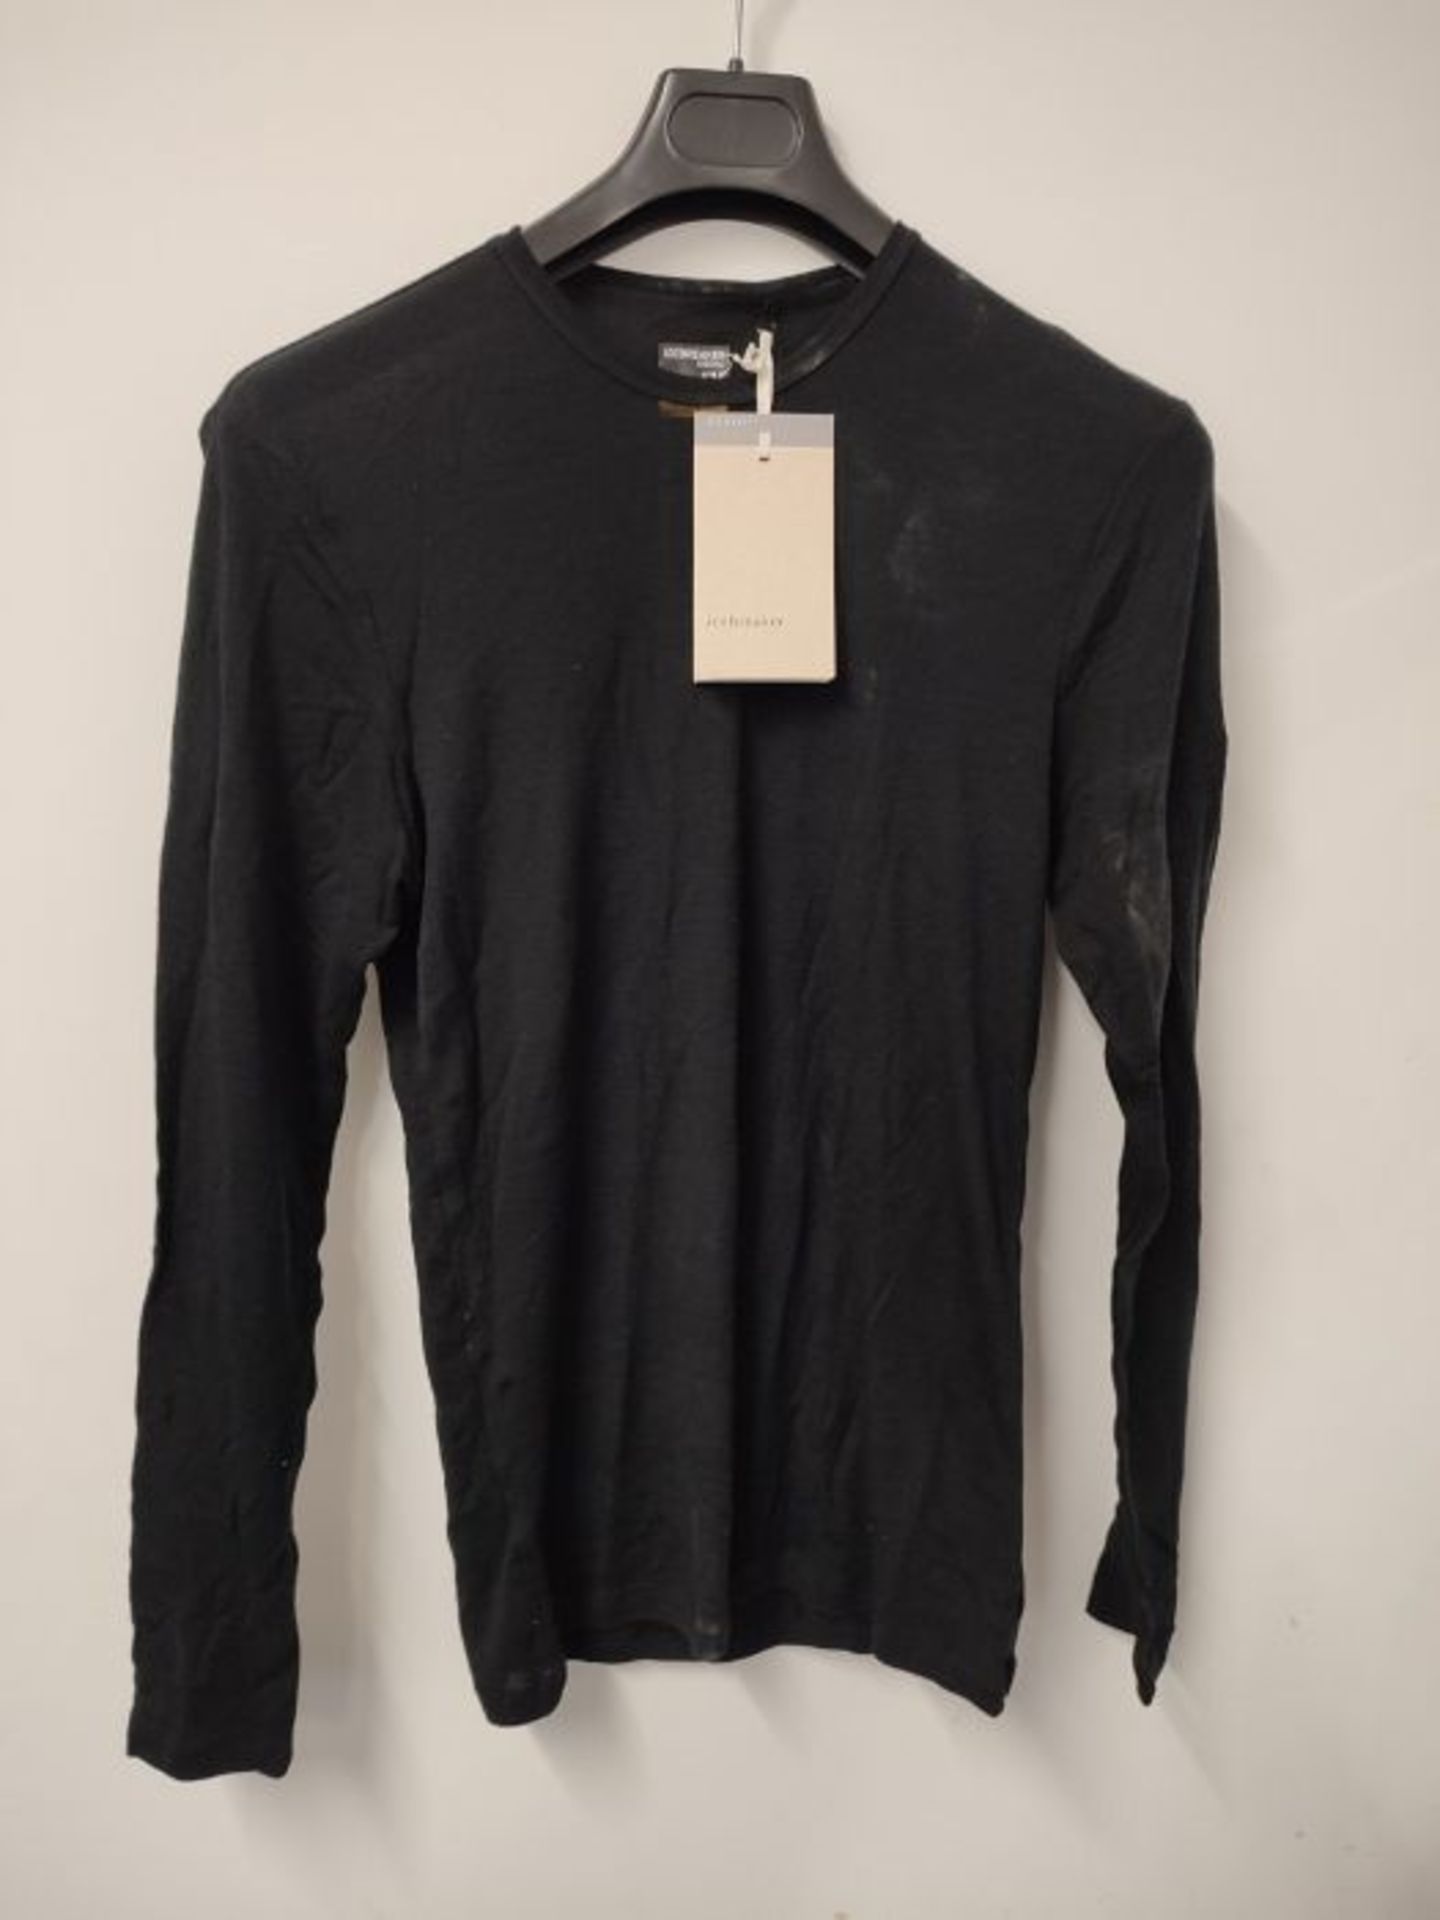 RRP £69.00 Icebreaker Men's Everyday Long Sleeve Crewe Thermal Top T shirt, Black, M UK - Image 2 of 2